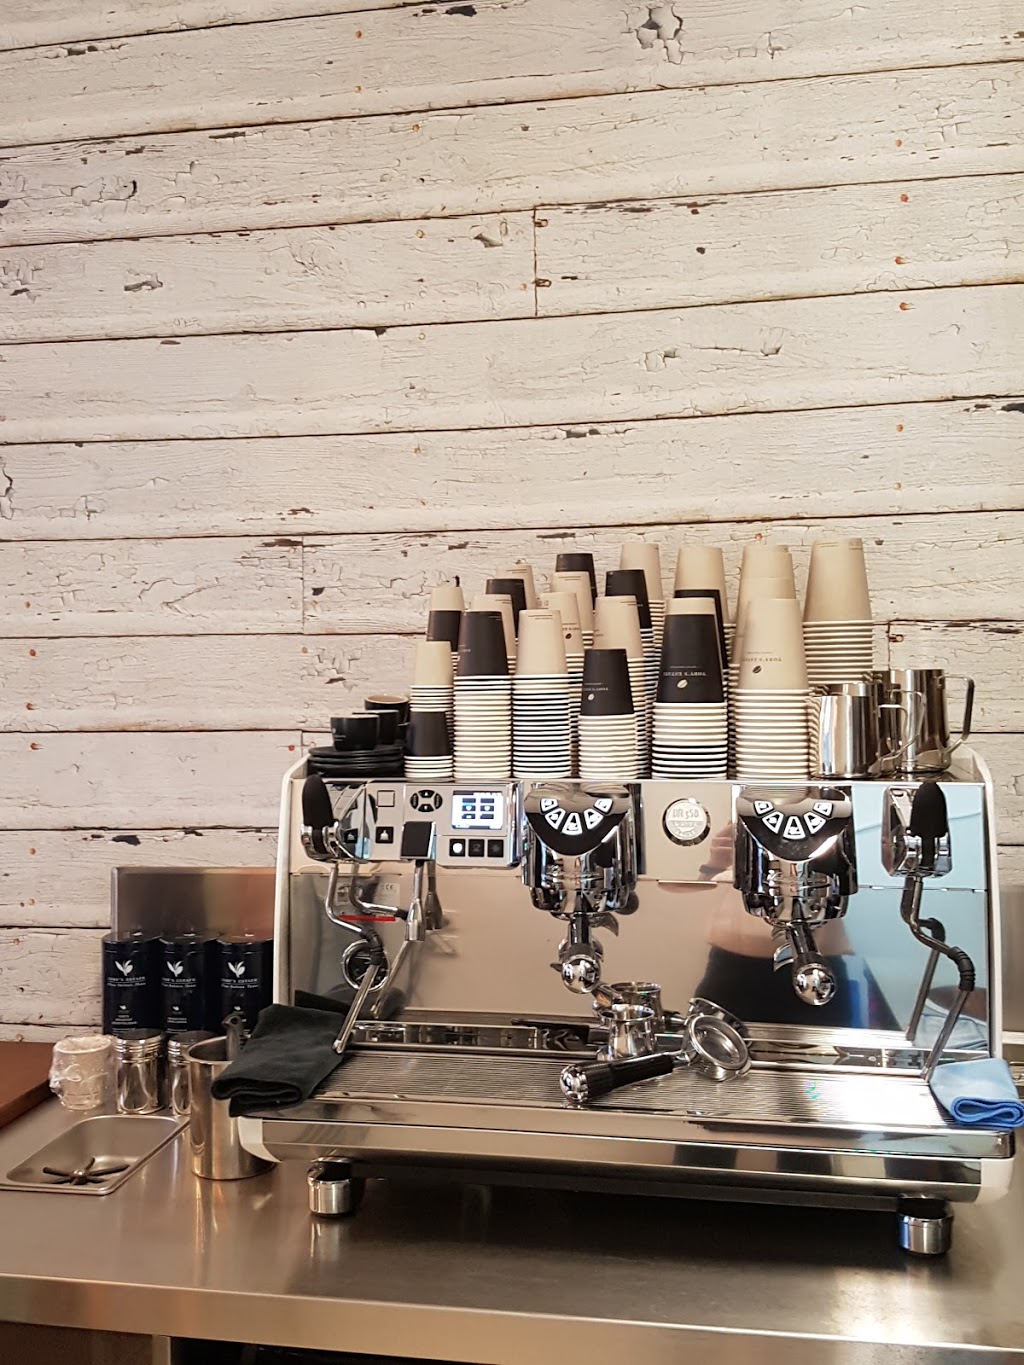 Snatch Espresso | cafe | 2/2 Nuban St, Currumbin Waters QLD 4223, Australia | 0438061737 OR +61 438 061 737